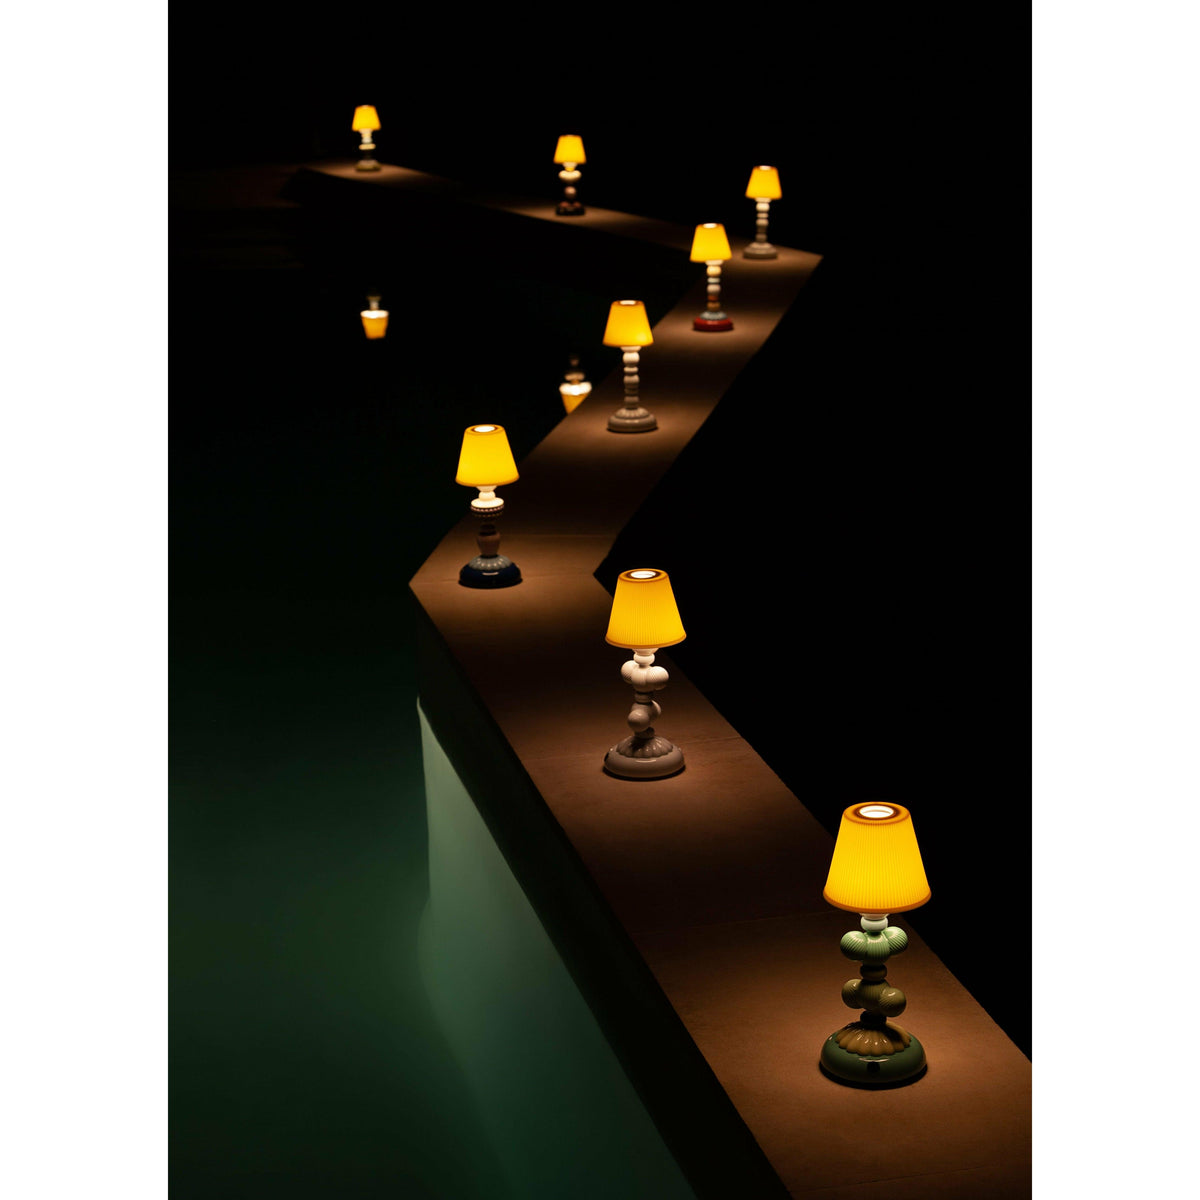 Lladro - Lotus Firefly Table Lamp - 01023759 | Montreal Lighting & Hardware